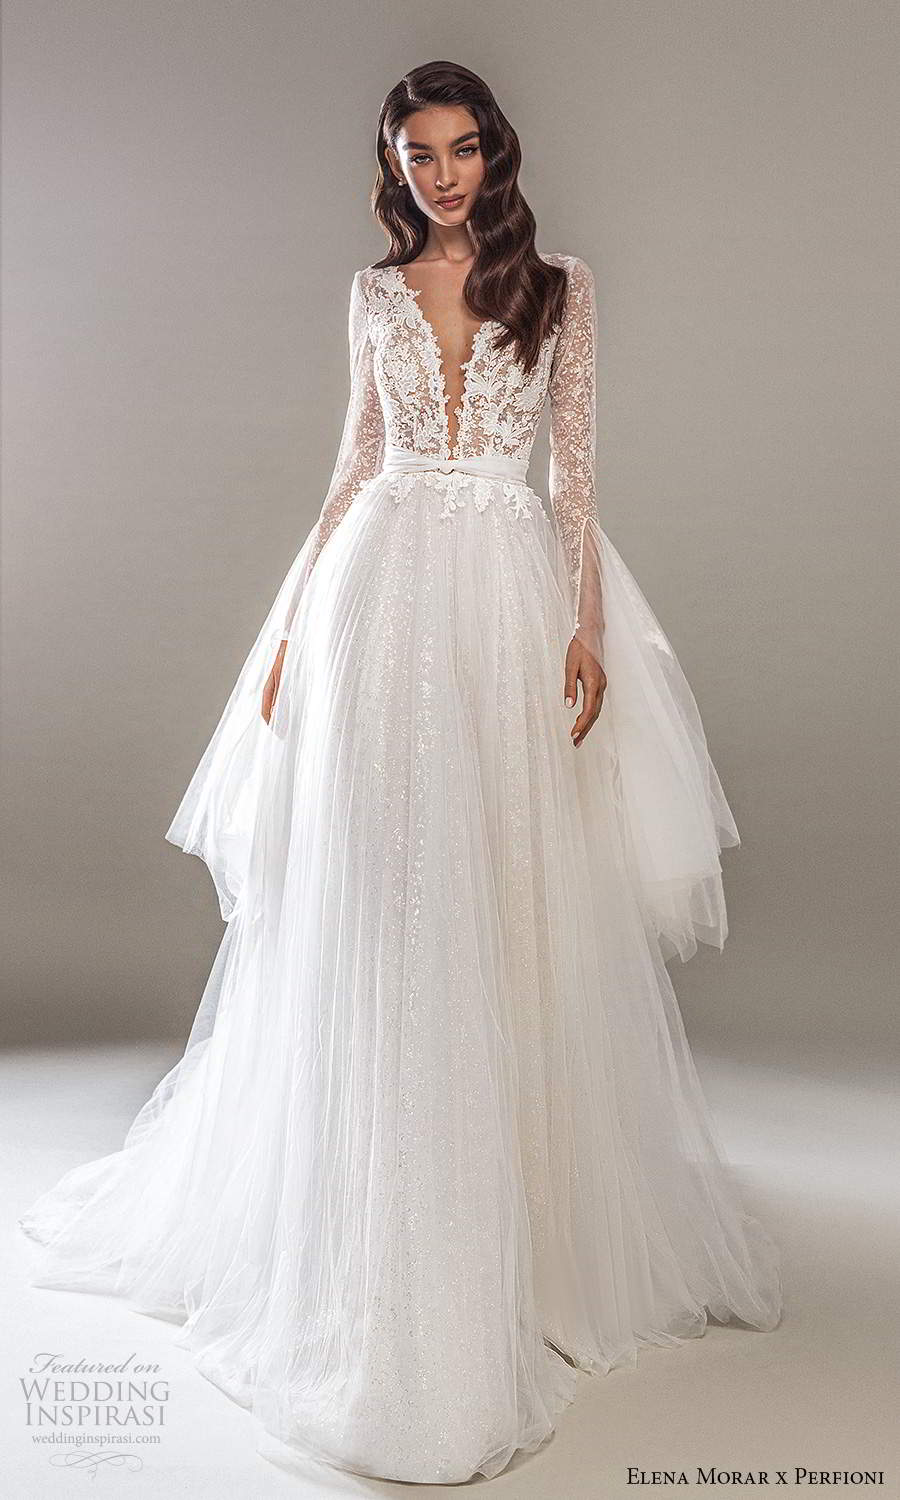 elena morar perfioni 2021 bridal long sleeves plunging v neckline embellished lace bodice glitter skirt a line ball gown wedding dress chapel train (12) mv